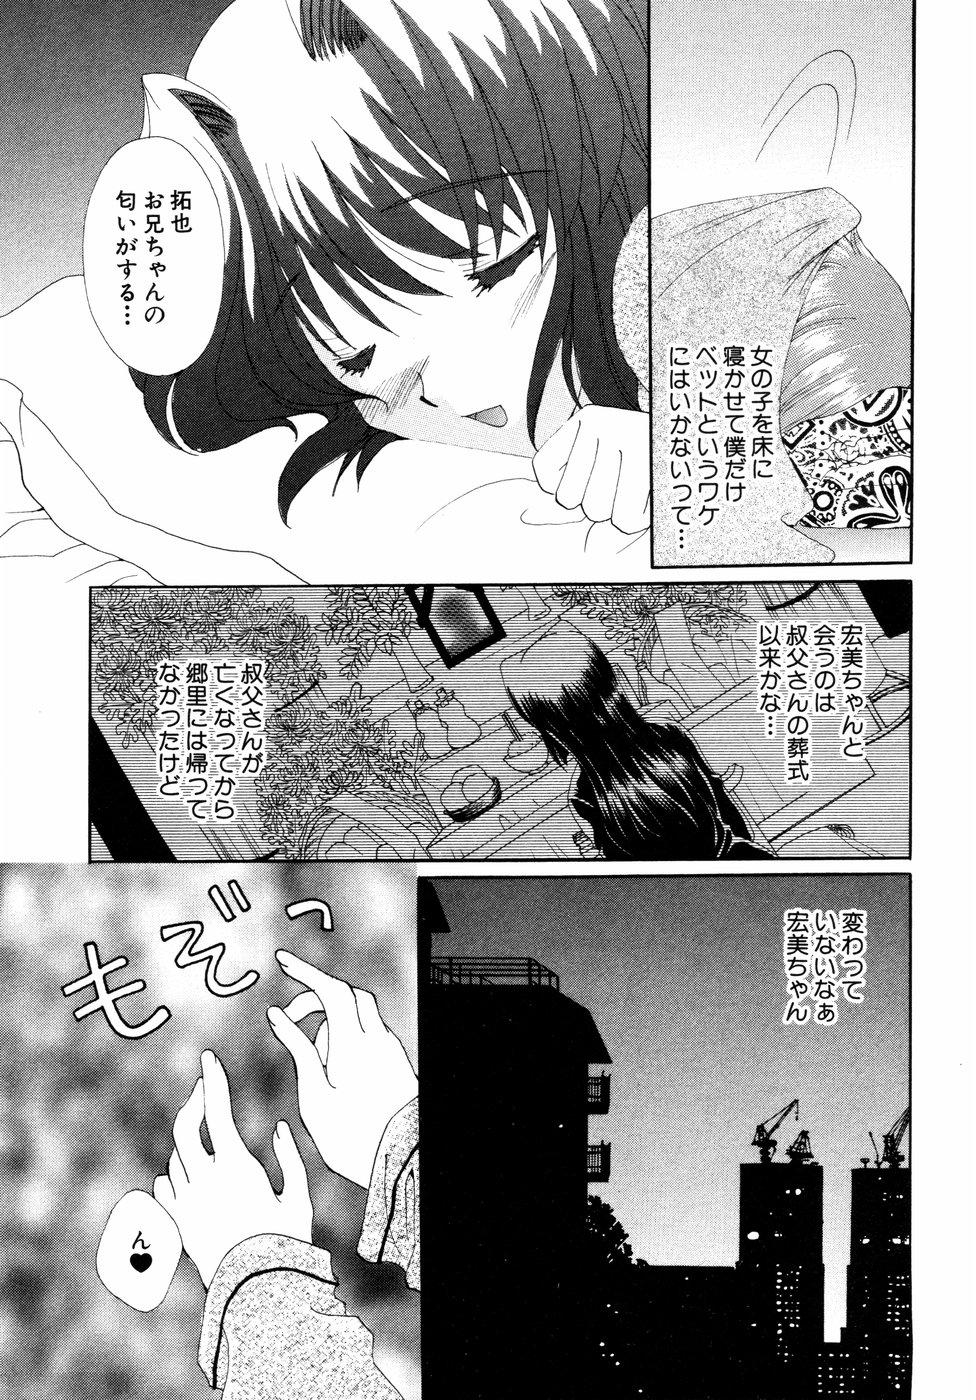 [Anthology] Himitsu no Tobira - The Secret Door - Kinshin Ai Anthology Vol. 01 171